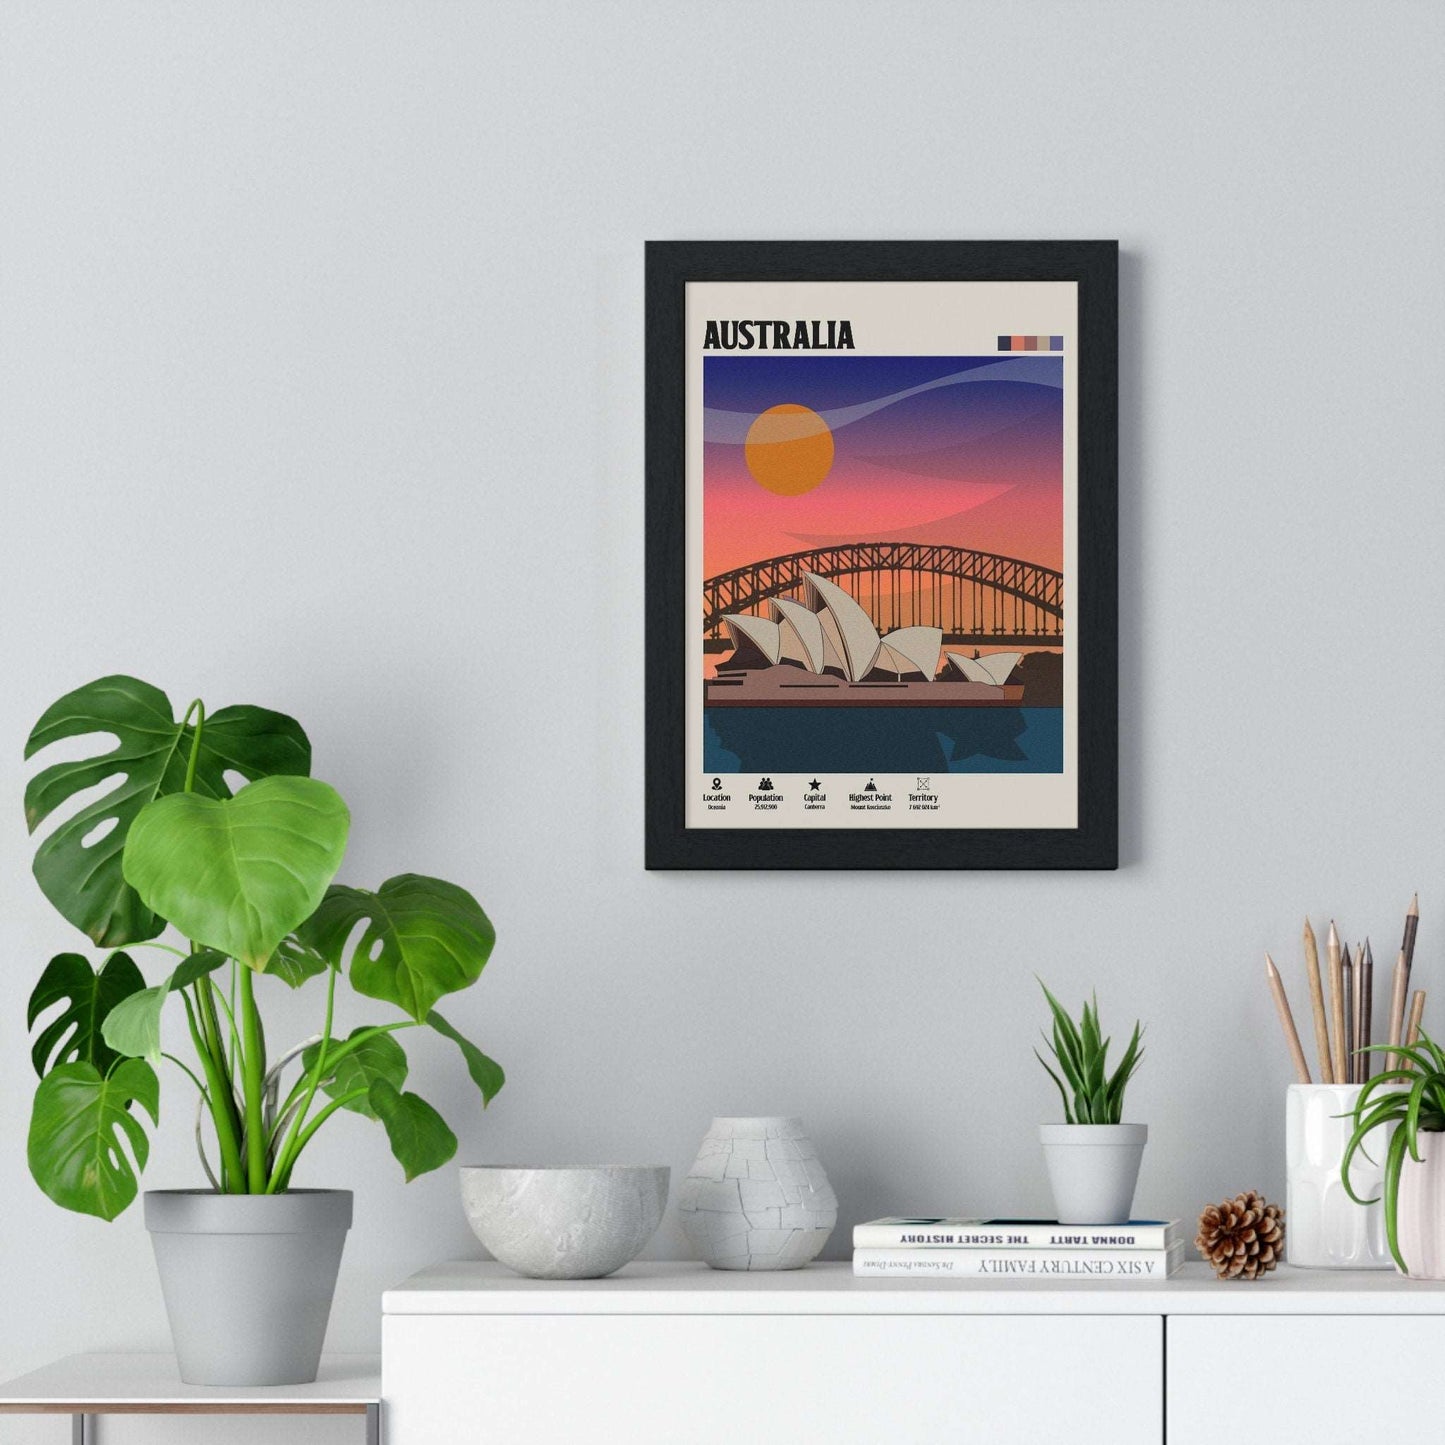 Sydney travel print - Australia - Poster Kingz